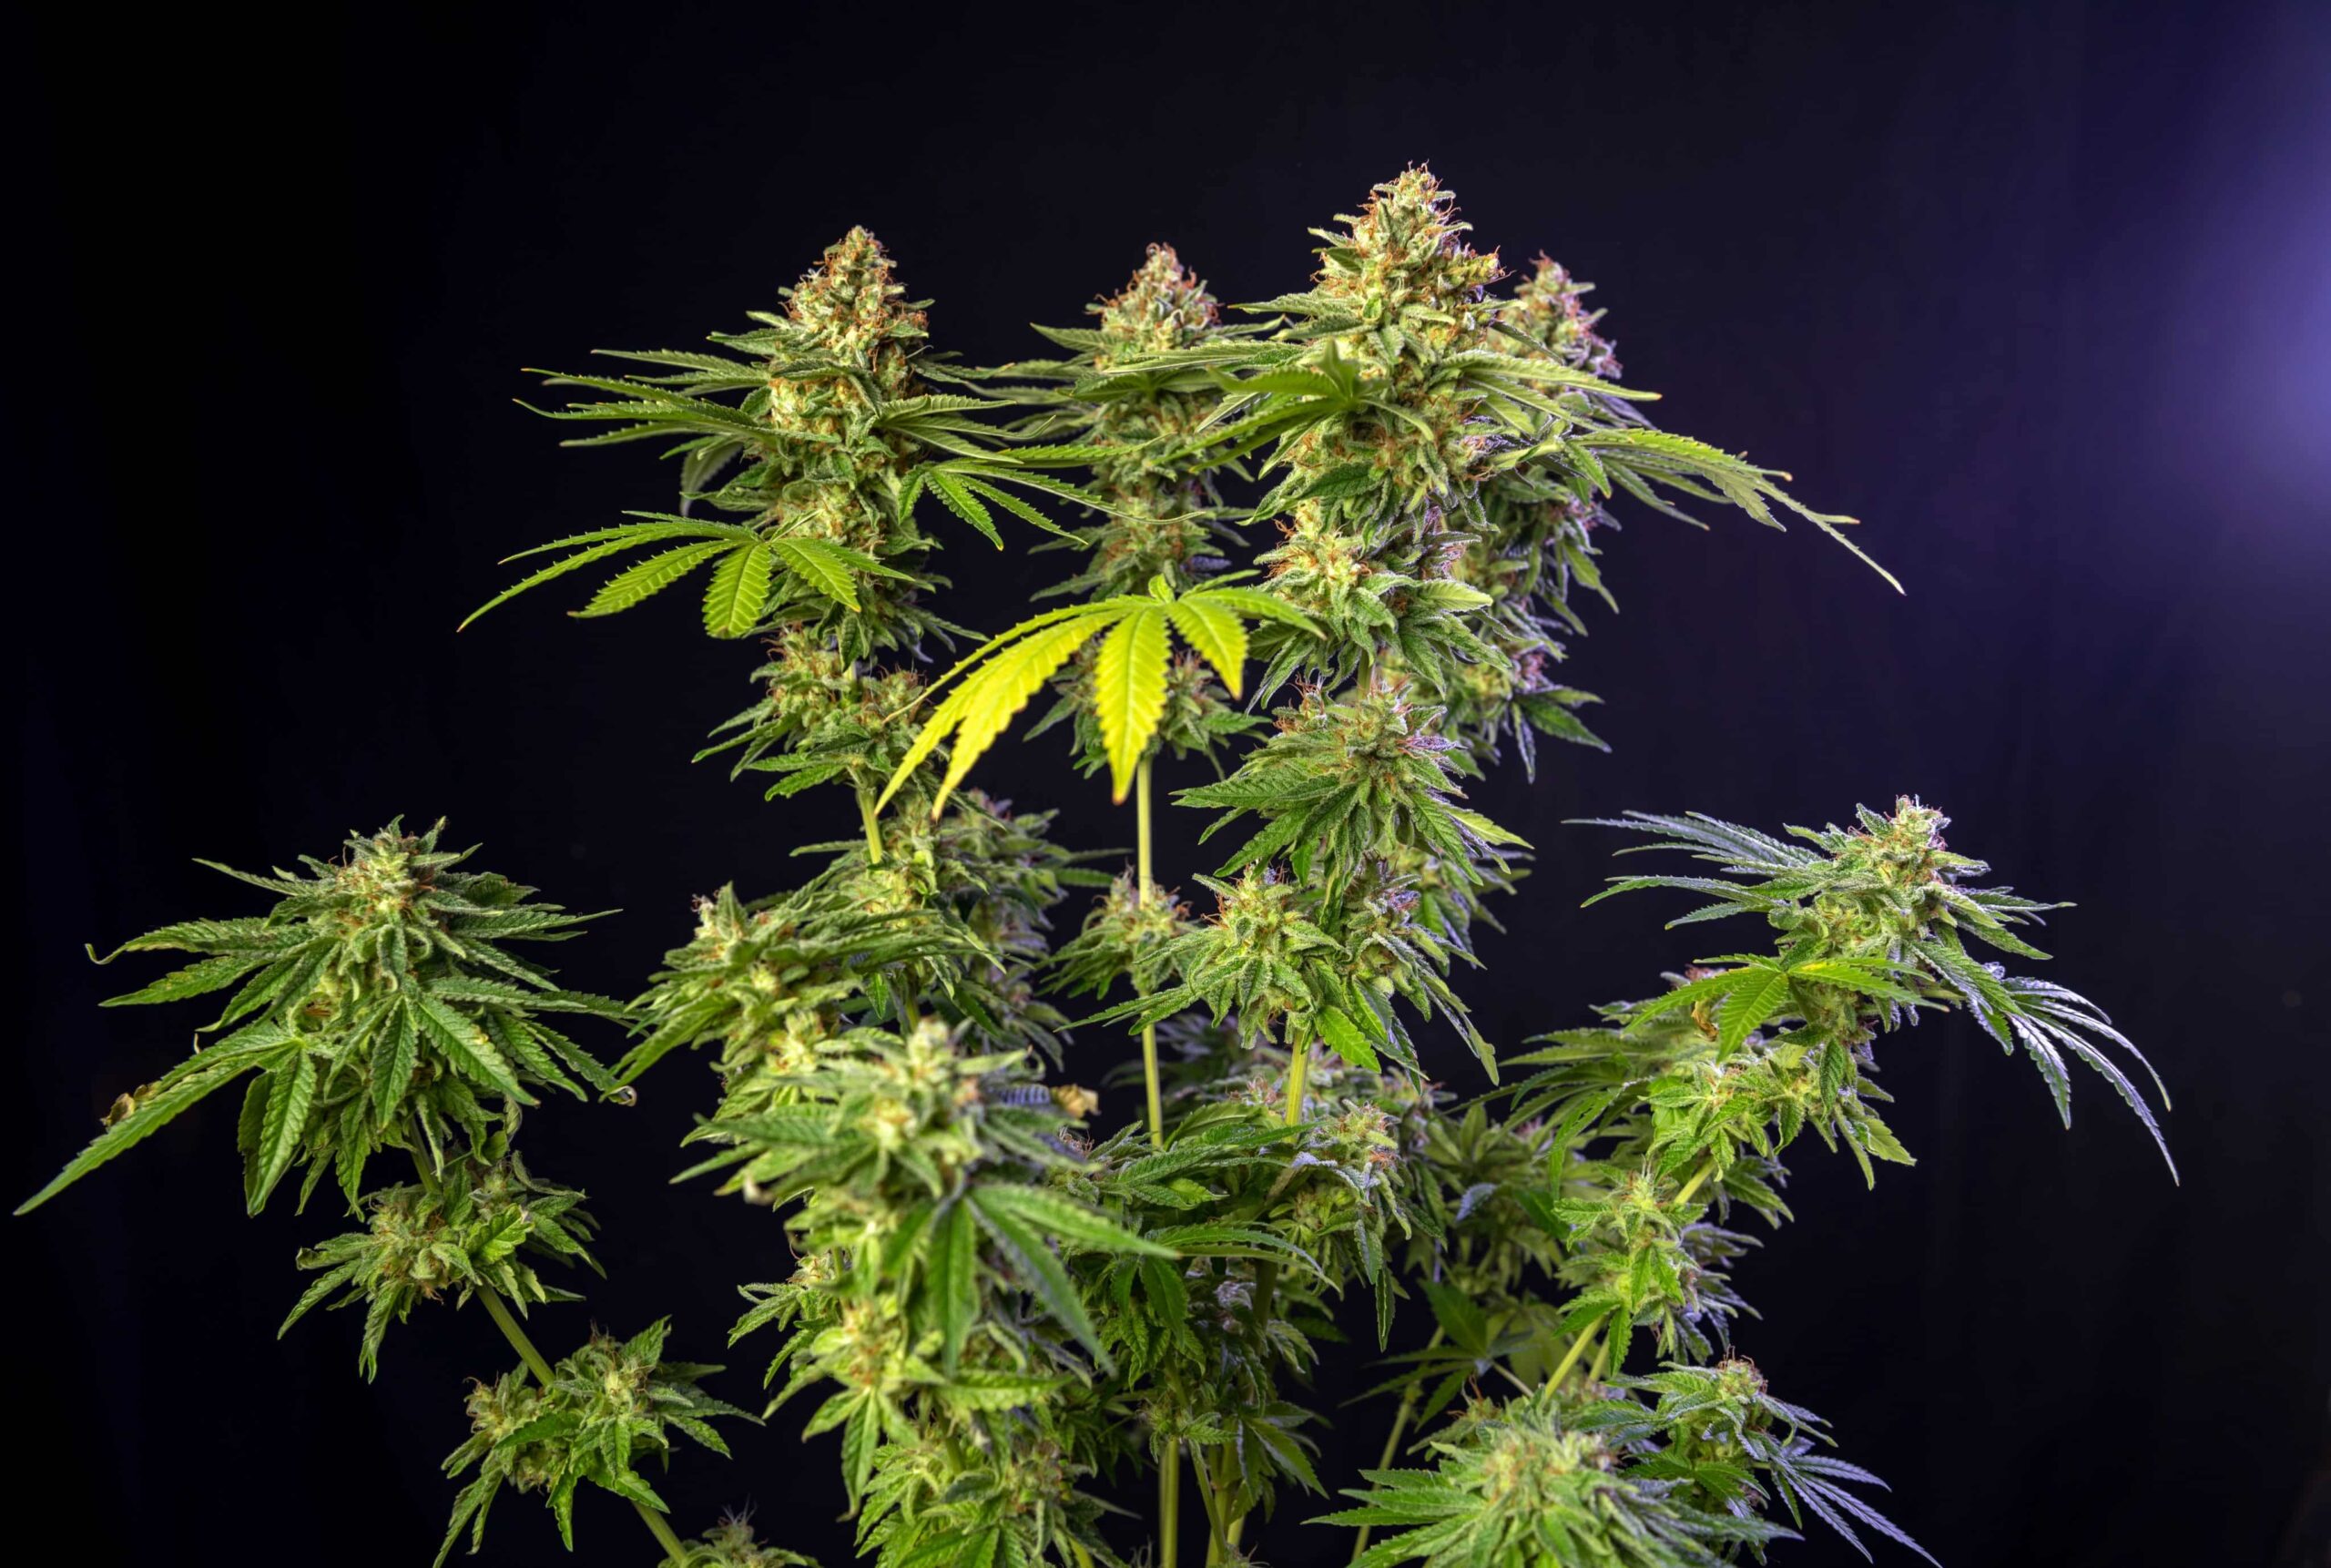 Connecticut Launches Recreational Cannabis Sales